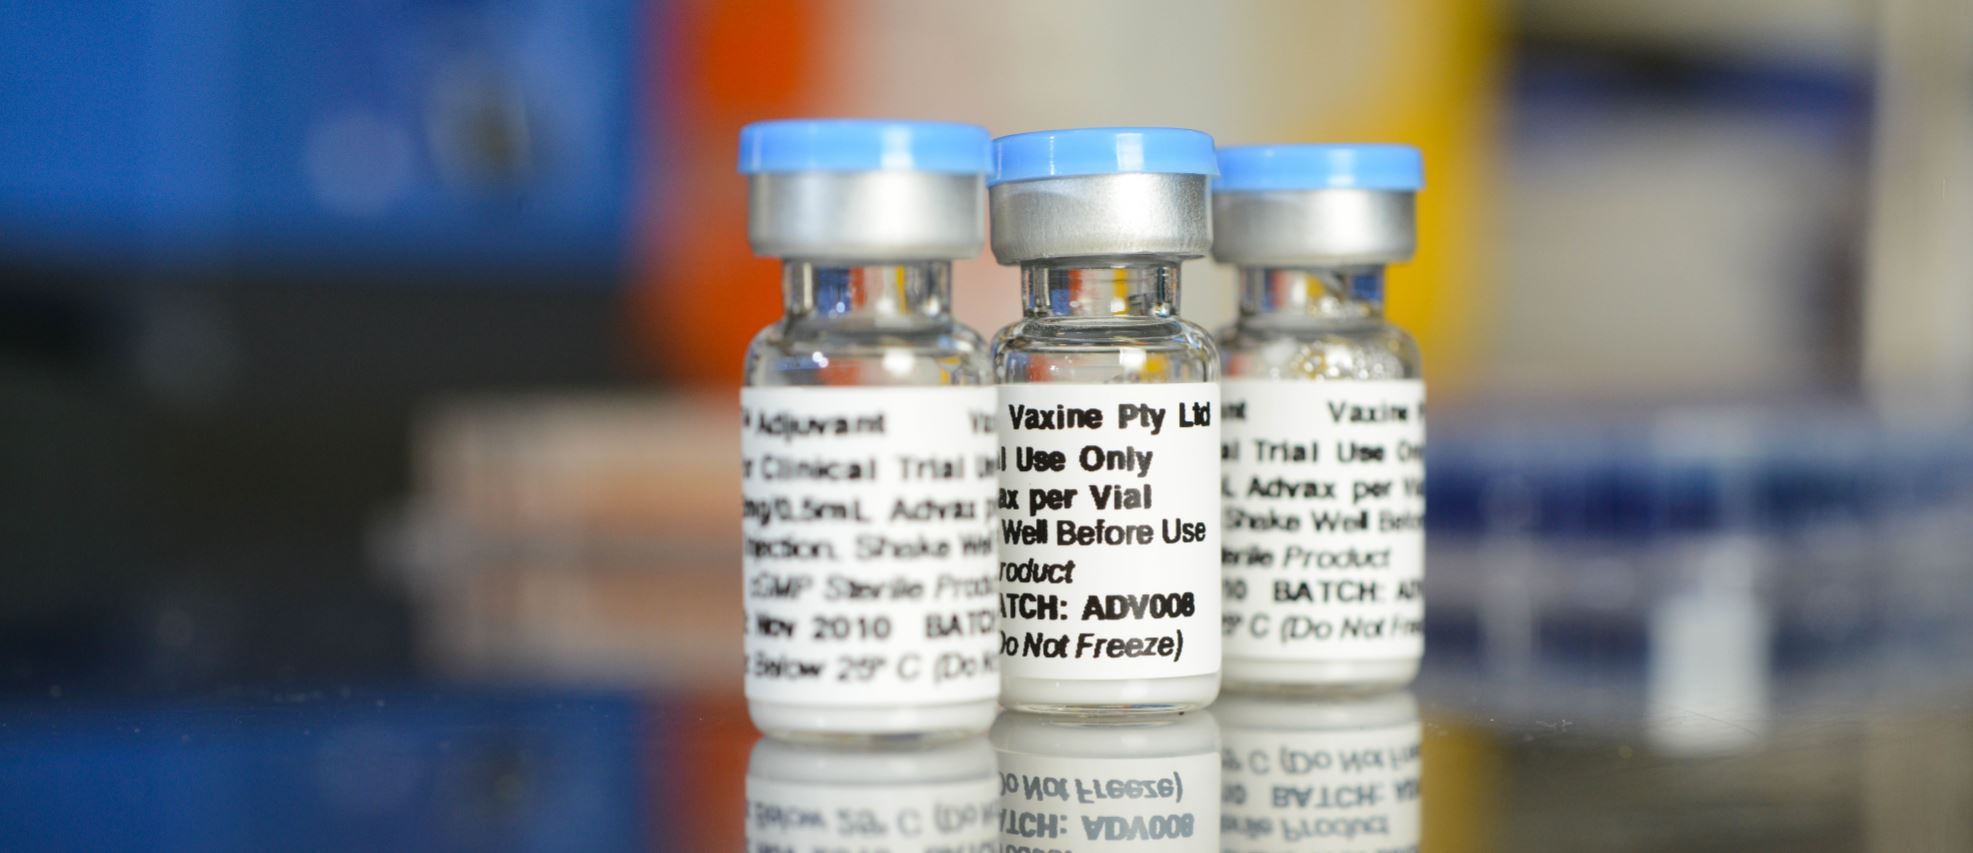 Vaxine Pty Ltd develops novel vaccination solutions